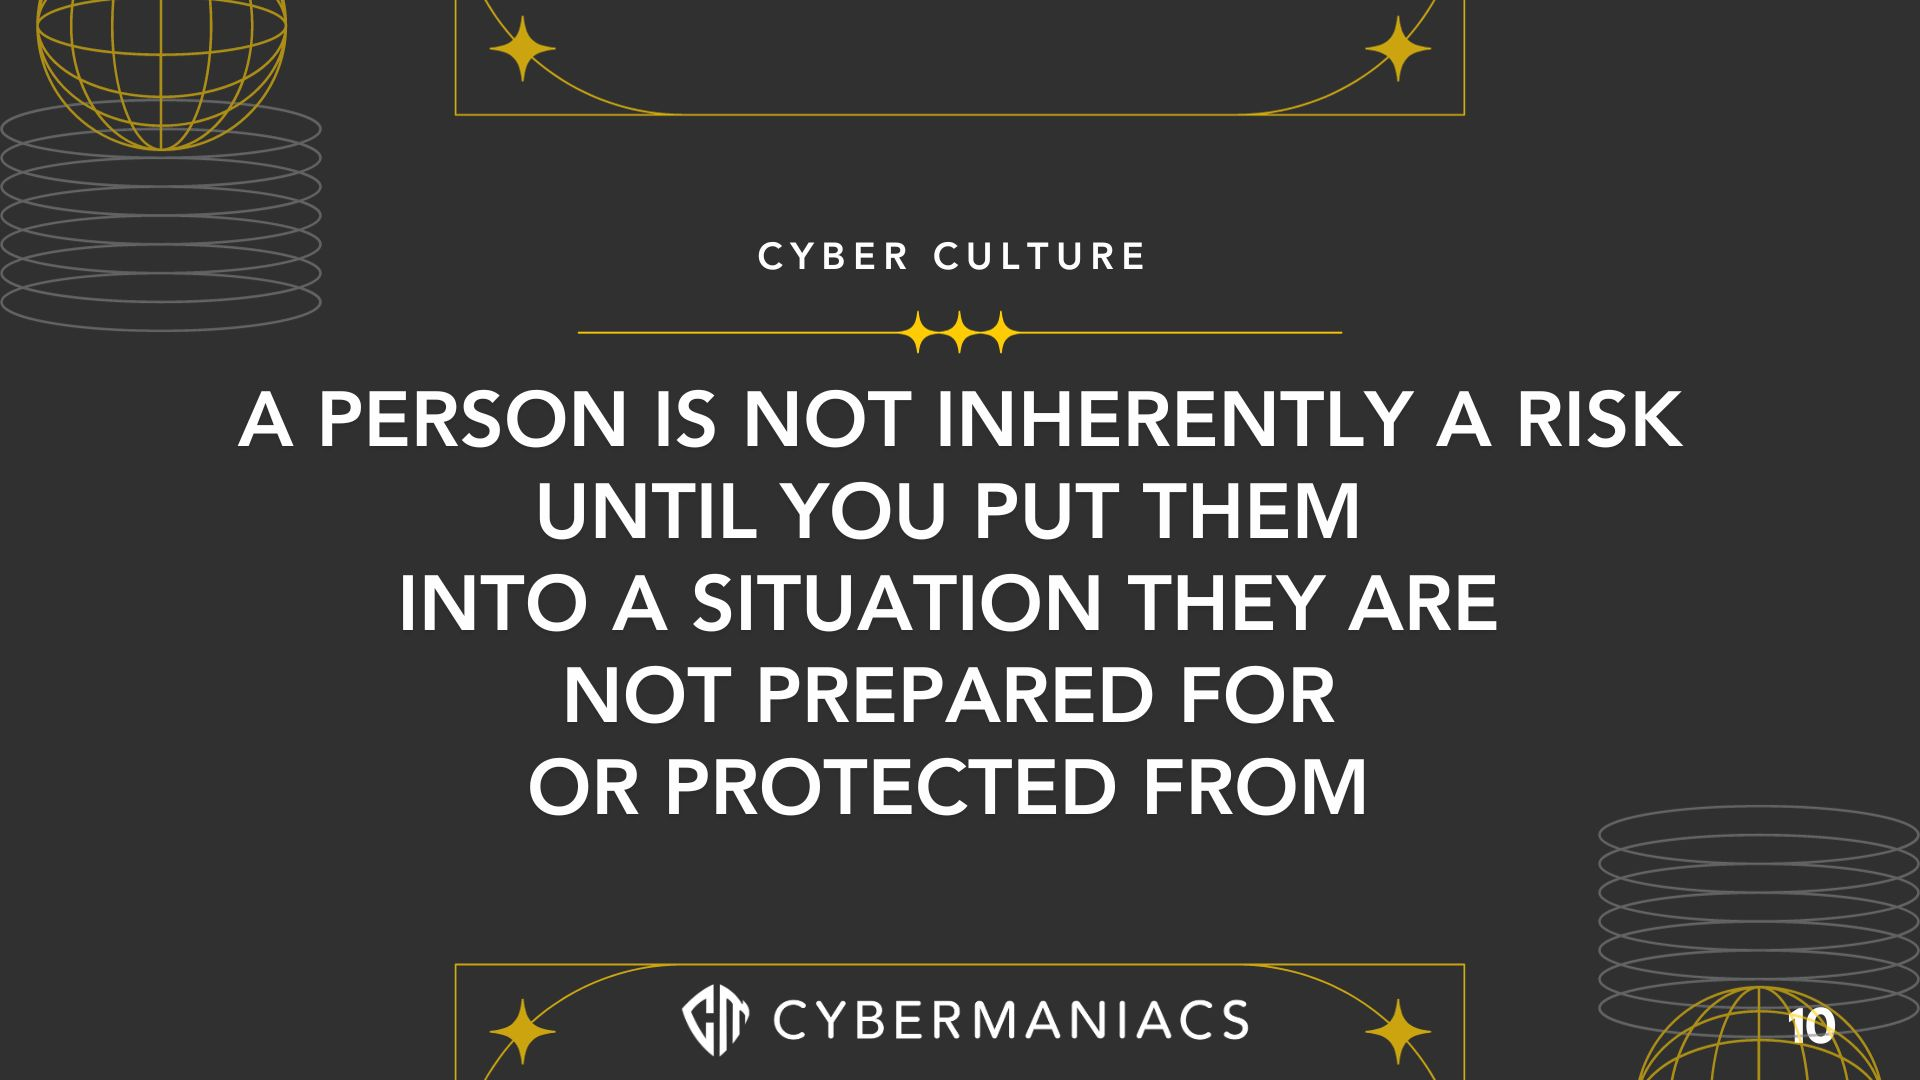  Cyber Security Culture